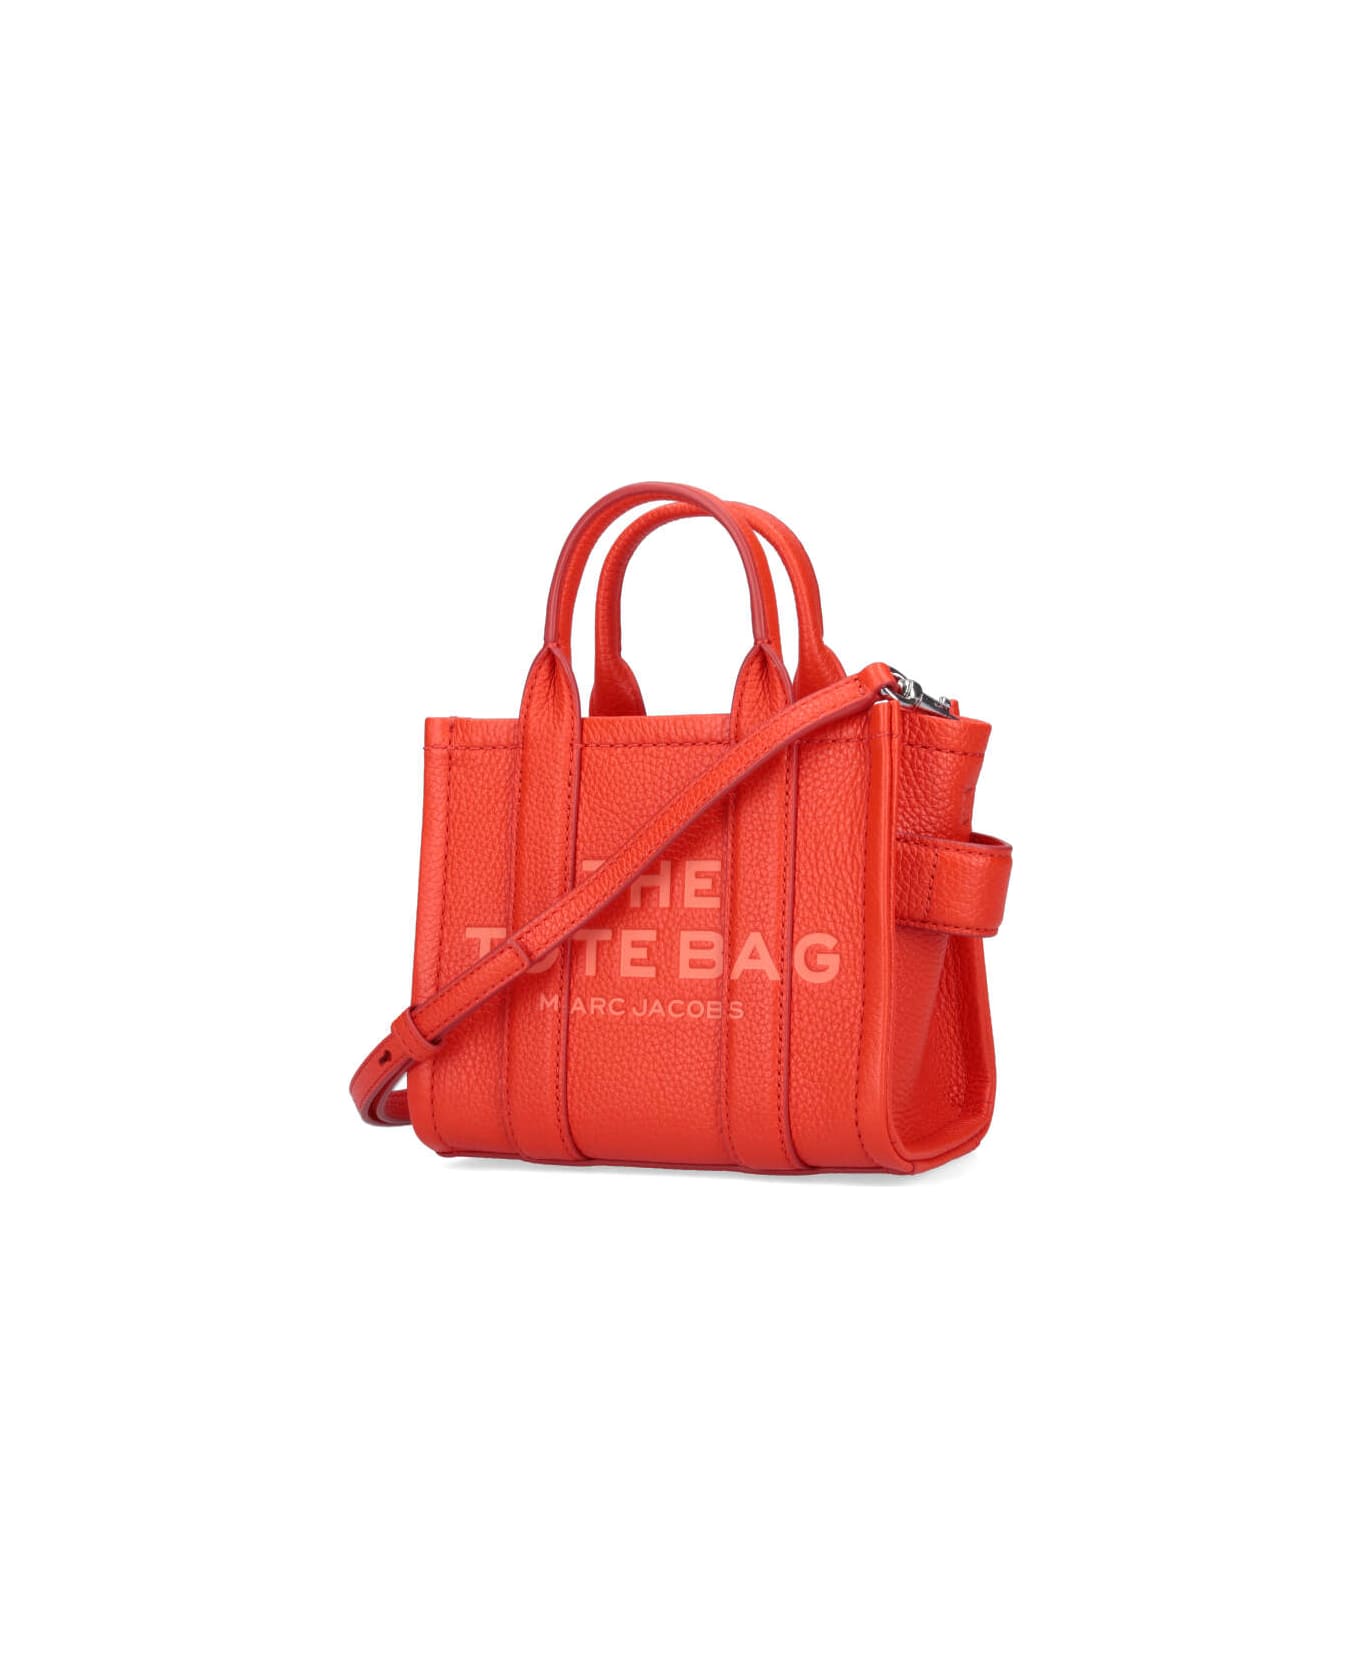 Marc Jacobs The Mini Tote Bag - Orange トートバッグ